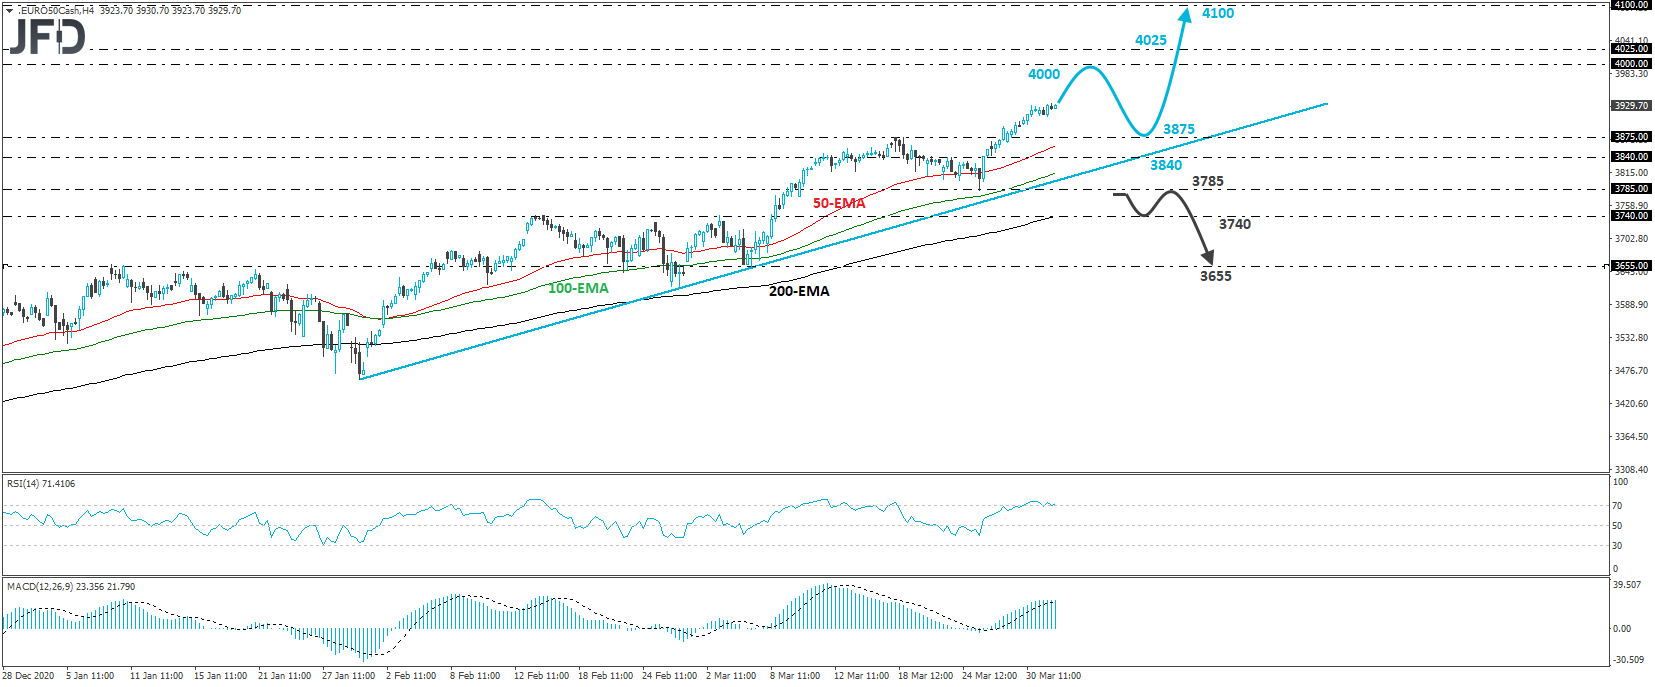 Euro Stoxx 50 cash index 4-hour chart technical analysis